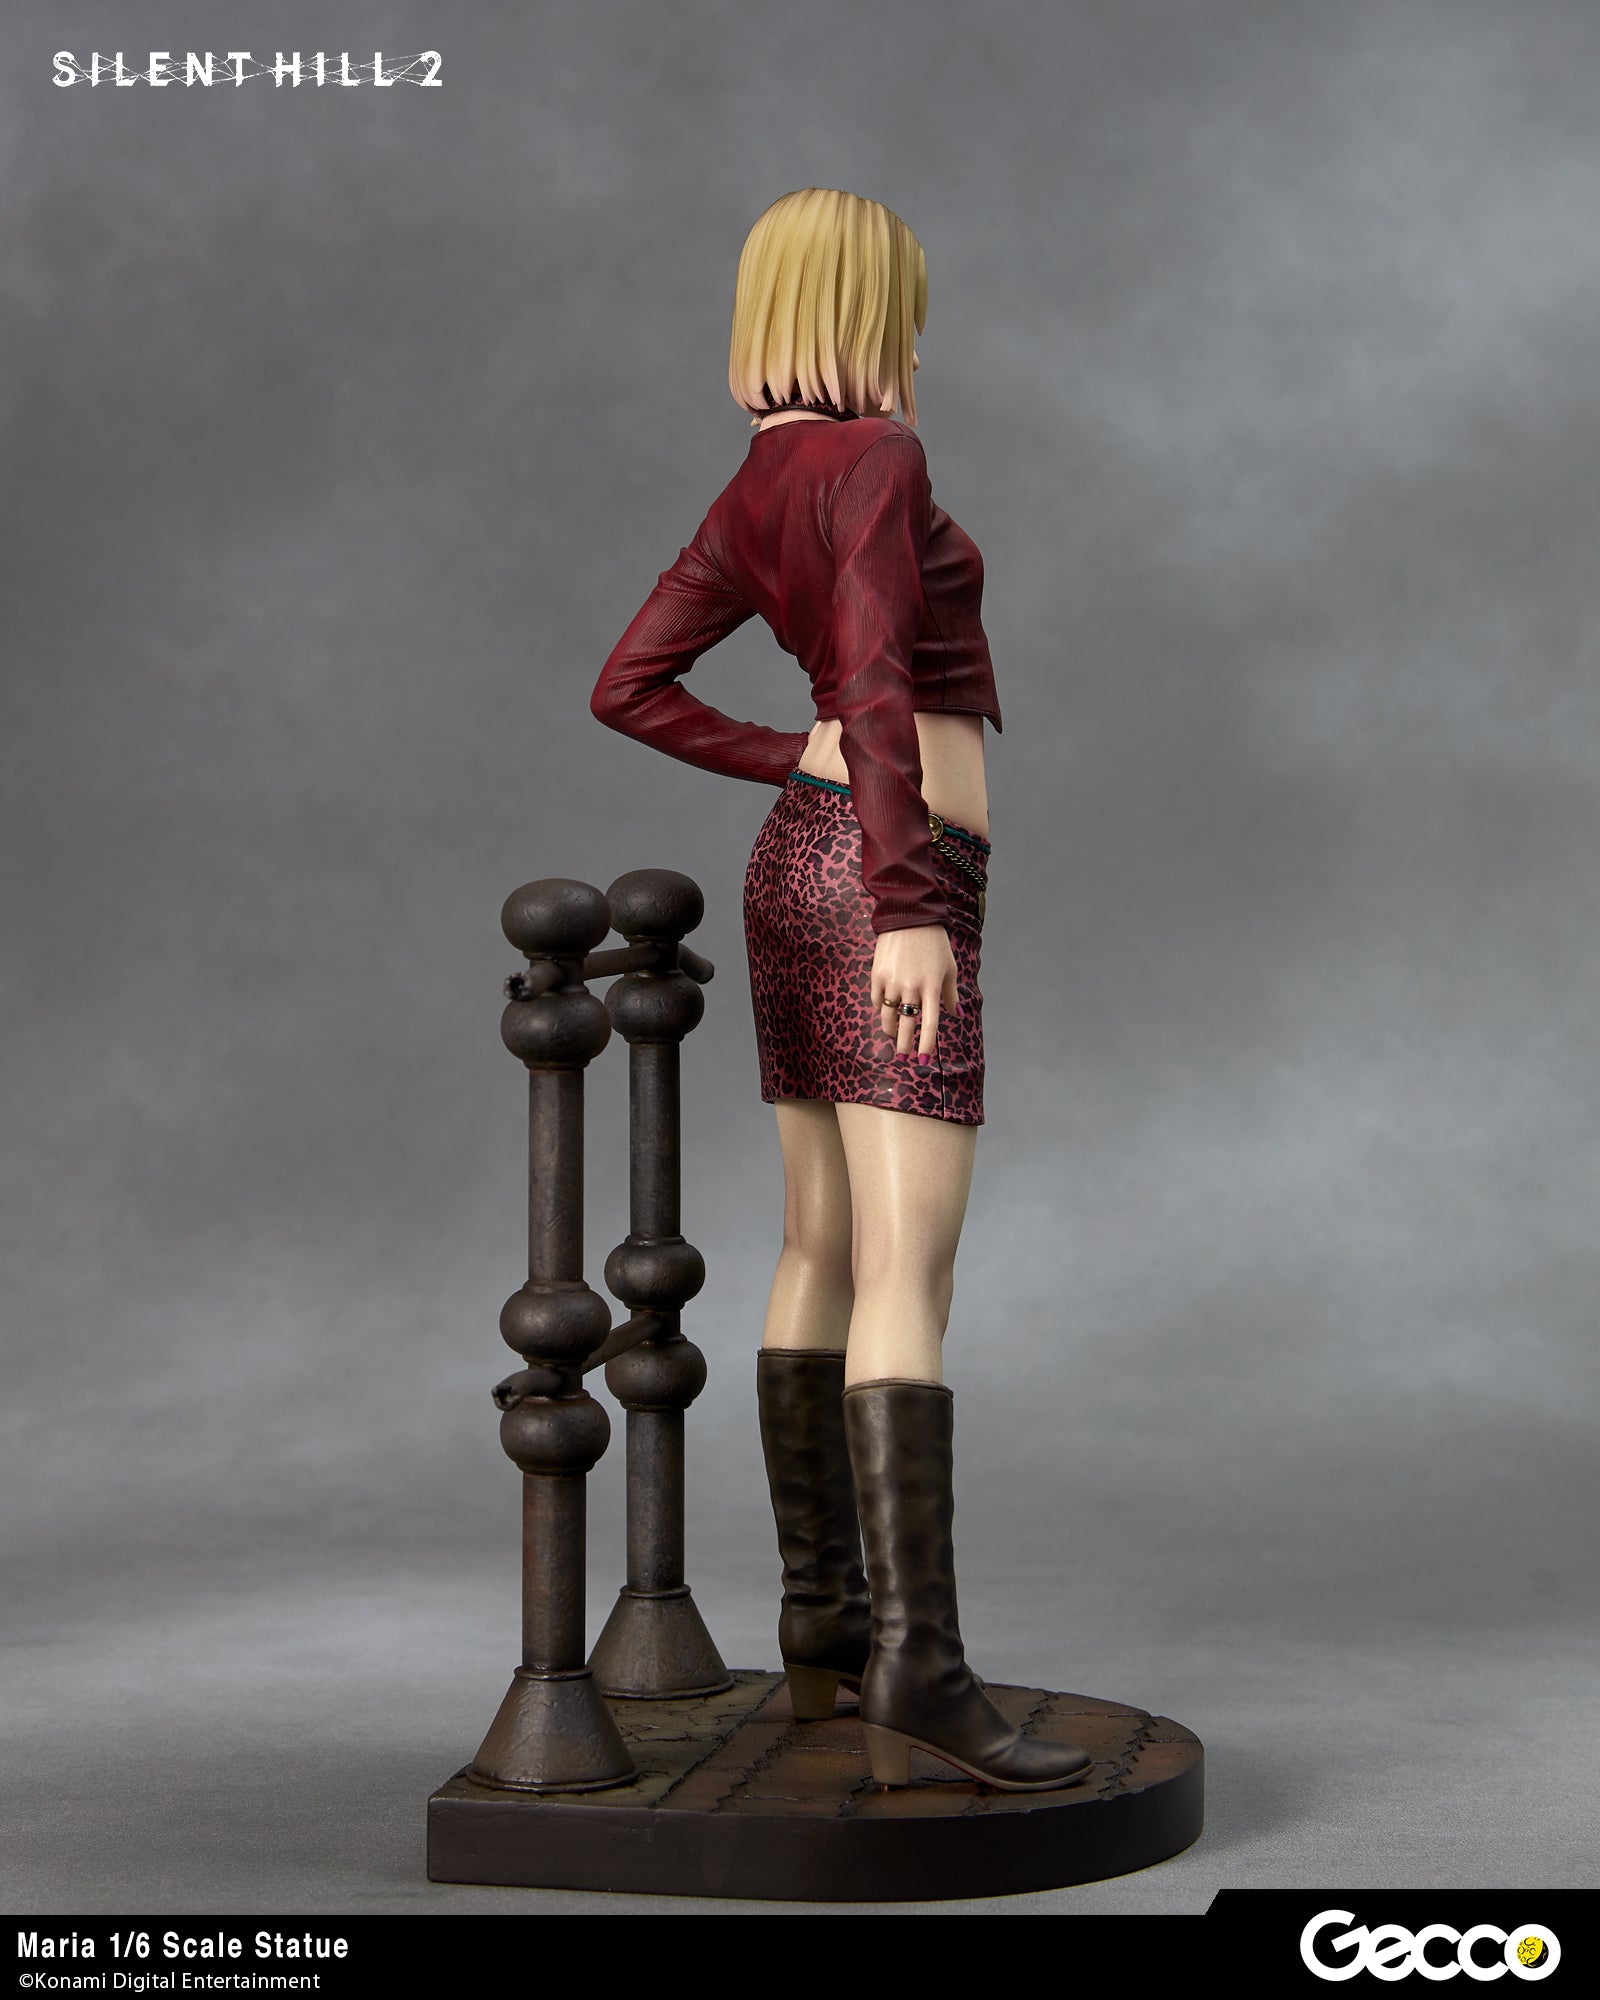 Gecco SILENT HILL 2 Maria 1/6 Scale Figure, Silent Hill 2